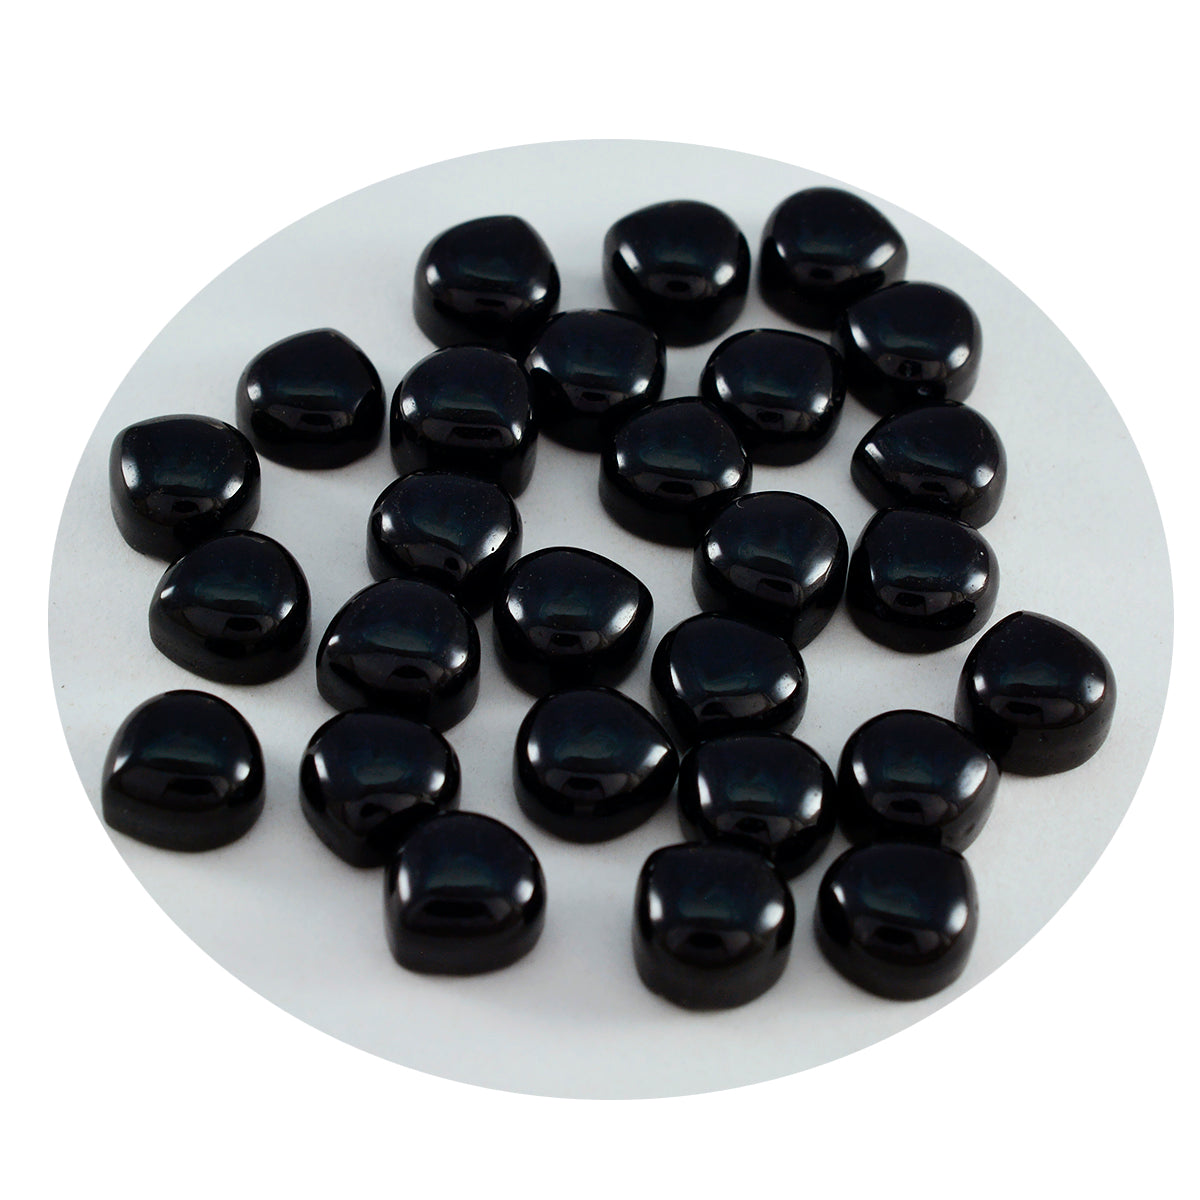 Riyogems 1PC Black Onyx Cabochon 6x6 mm Heart Shape wonderful Quality Loose Stone